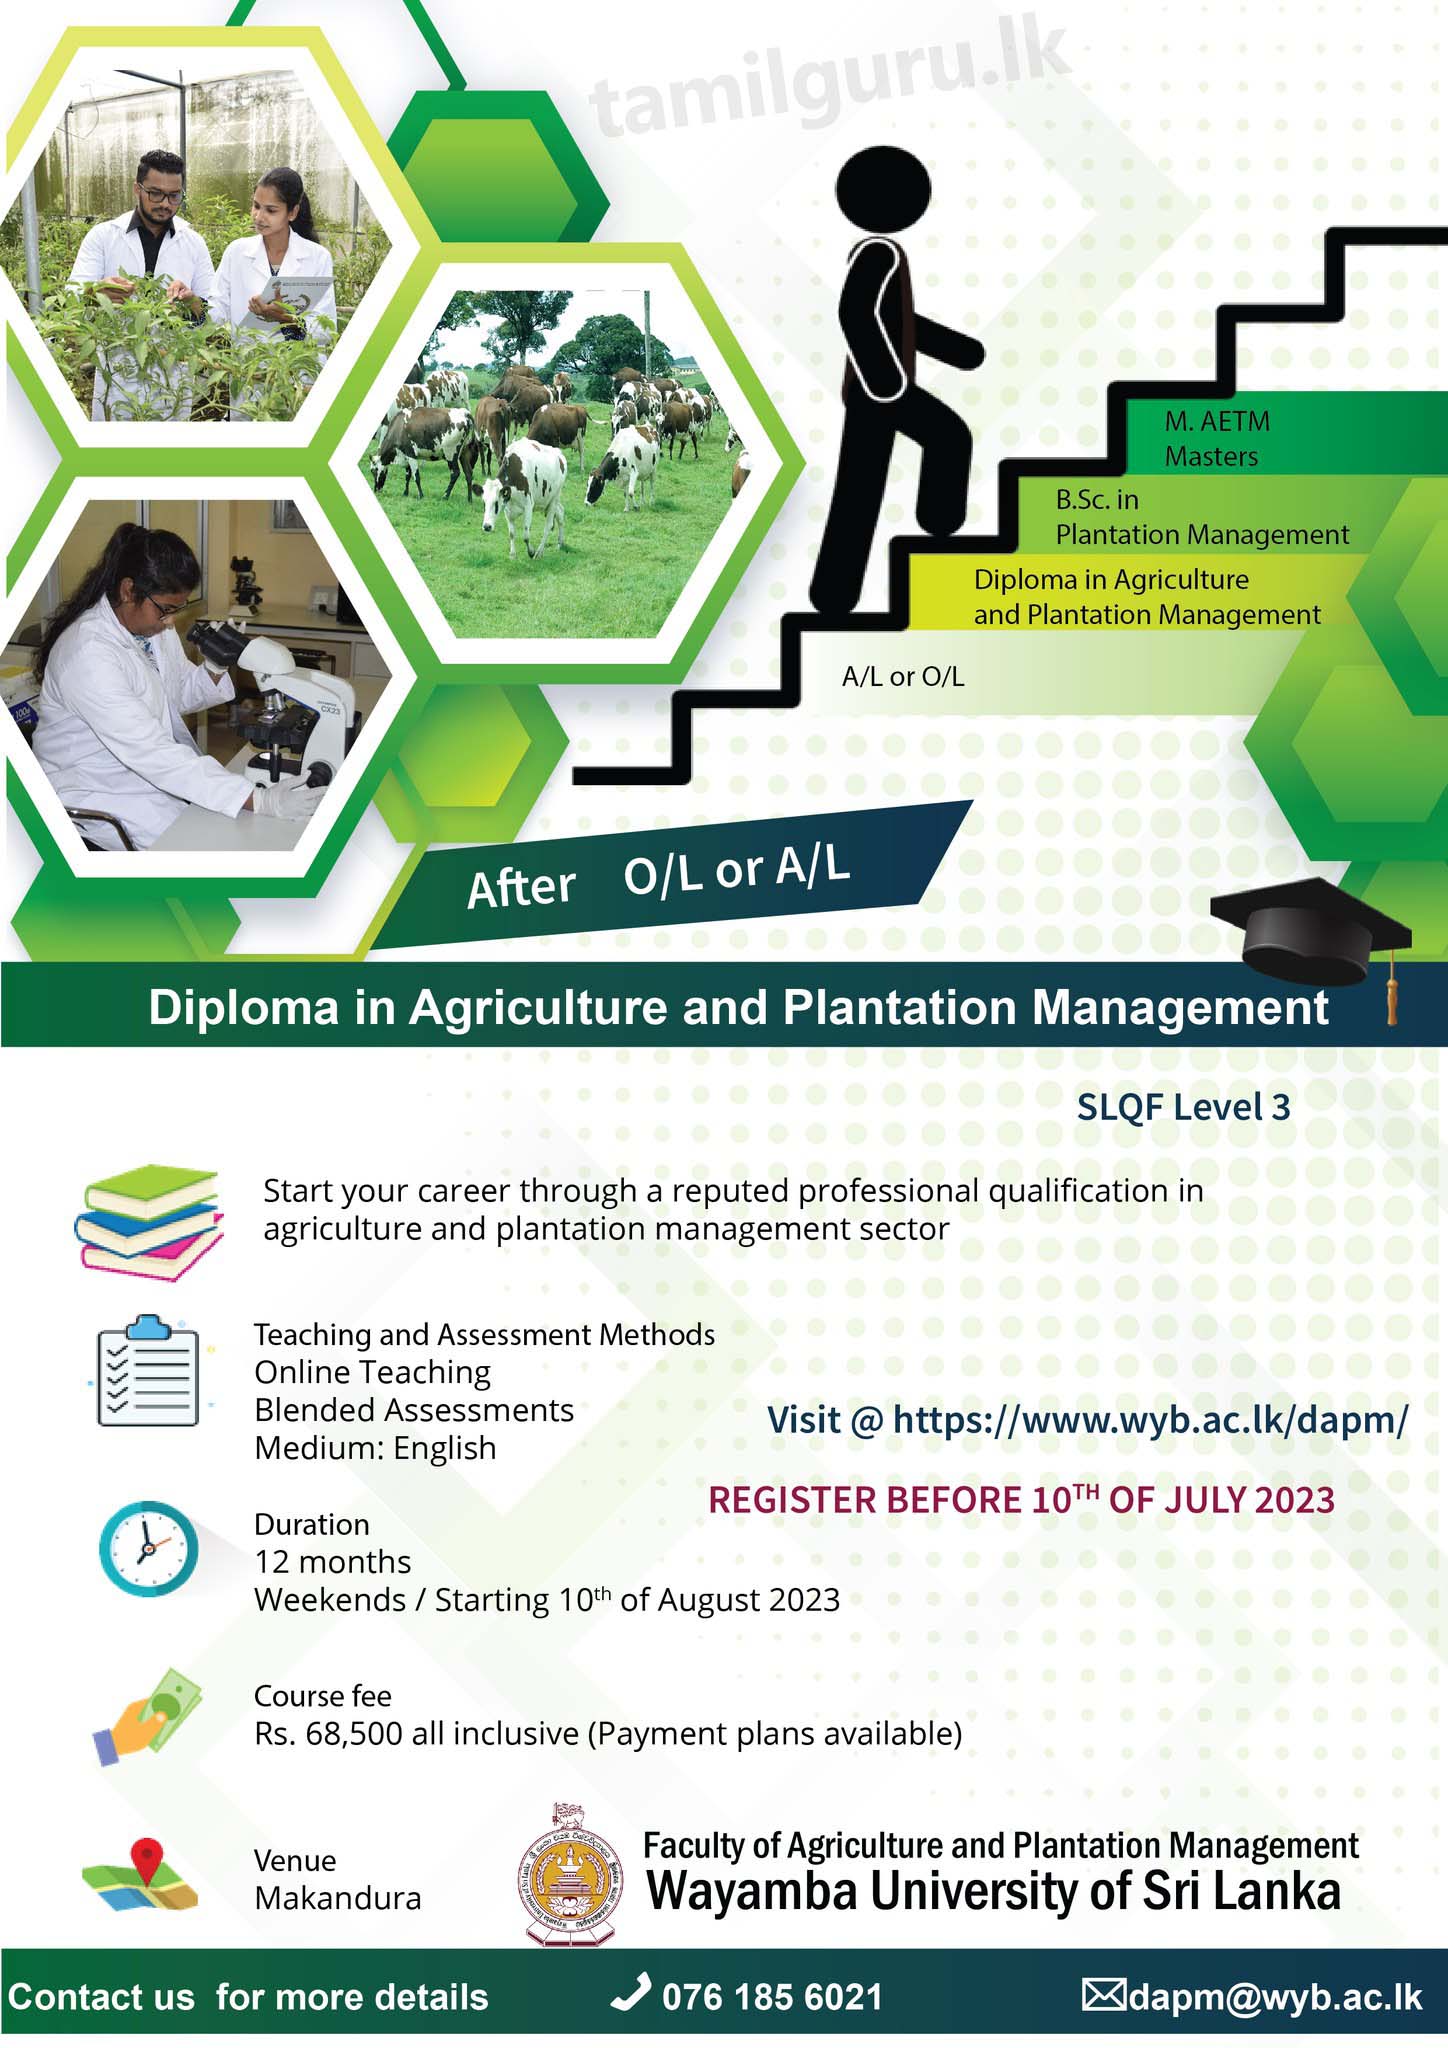 Diploma in Agriculture and Plantation Management (DAPM) 2023 - Wayamba University